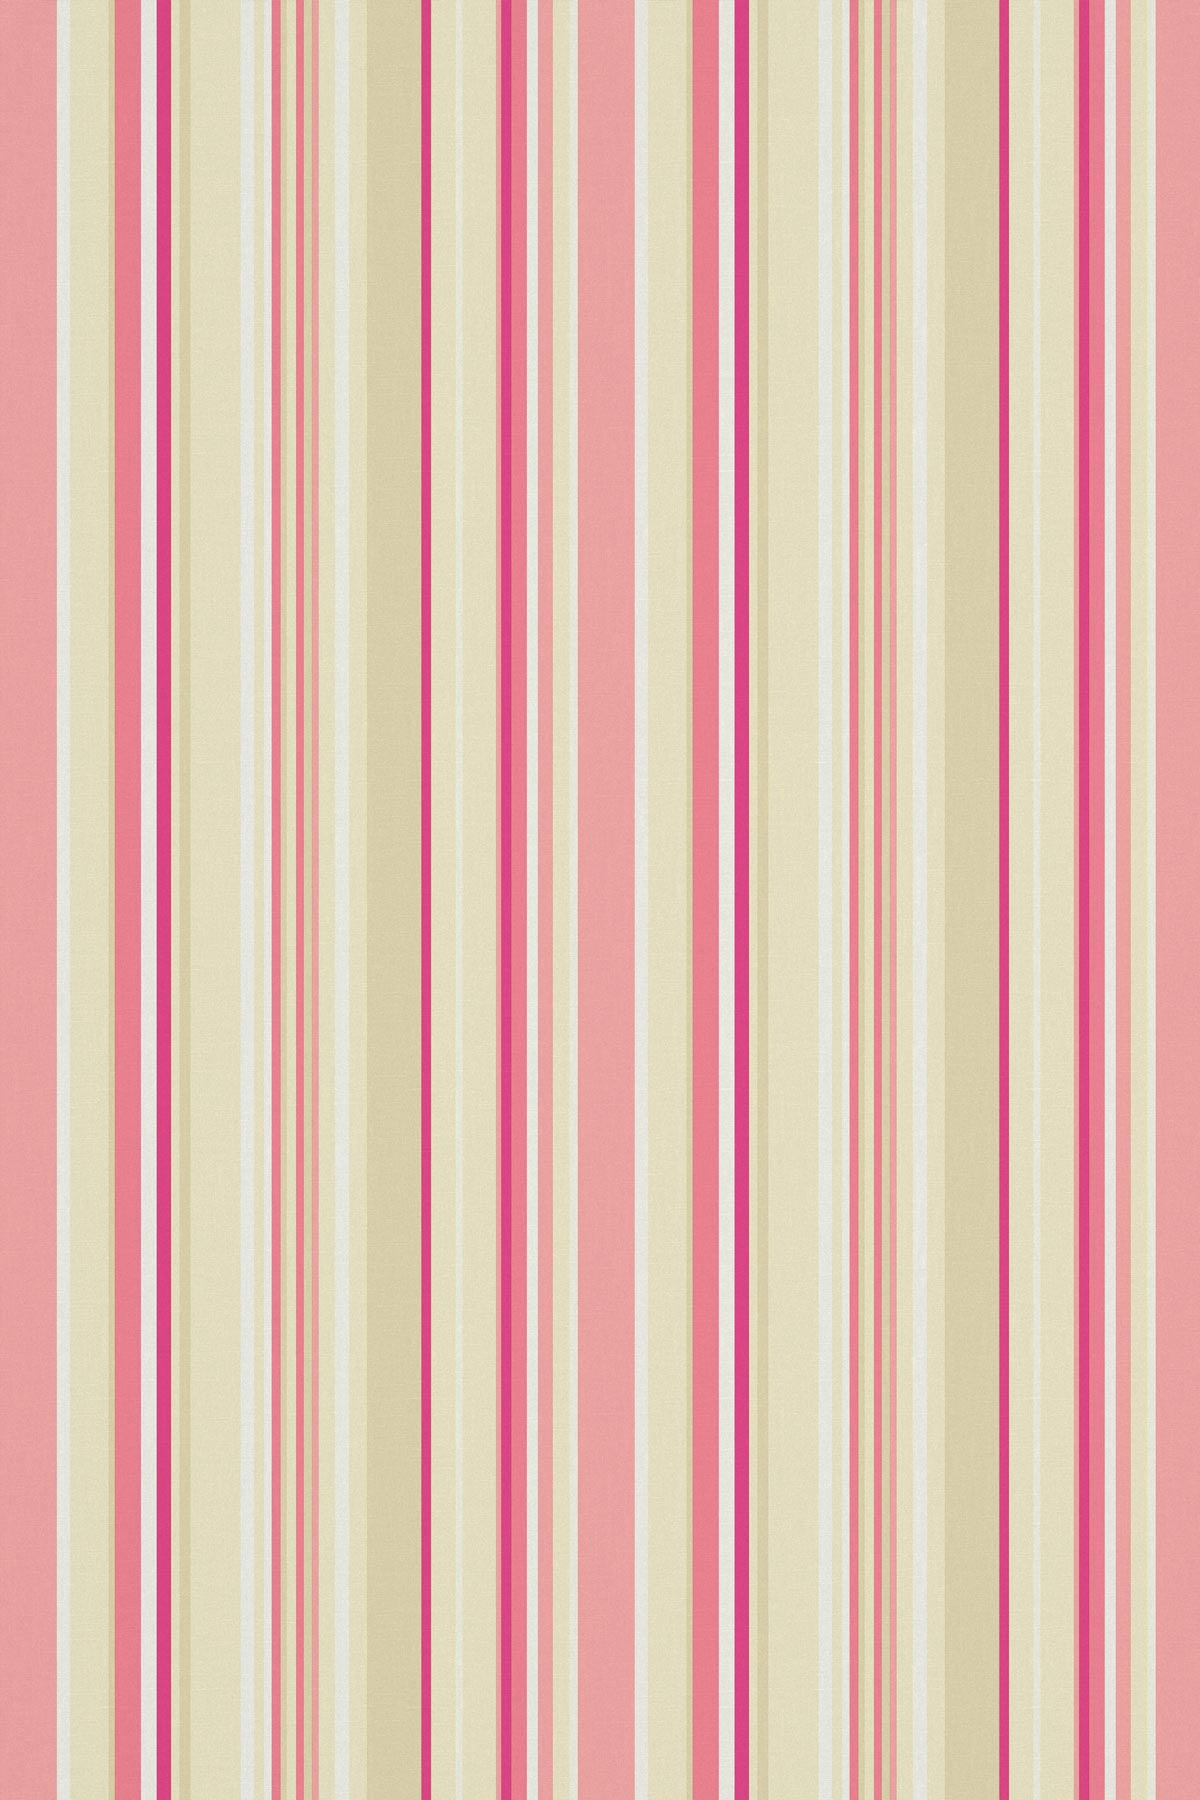 Rush Fabric - Fuchsia / Candyfloss / Neutral - by Harlequin